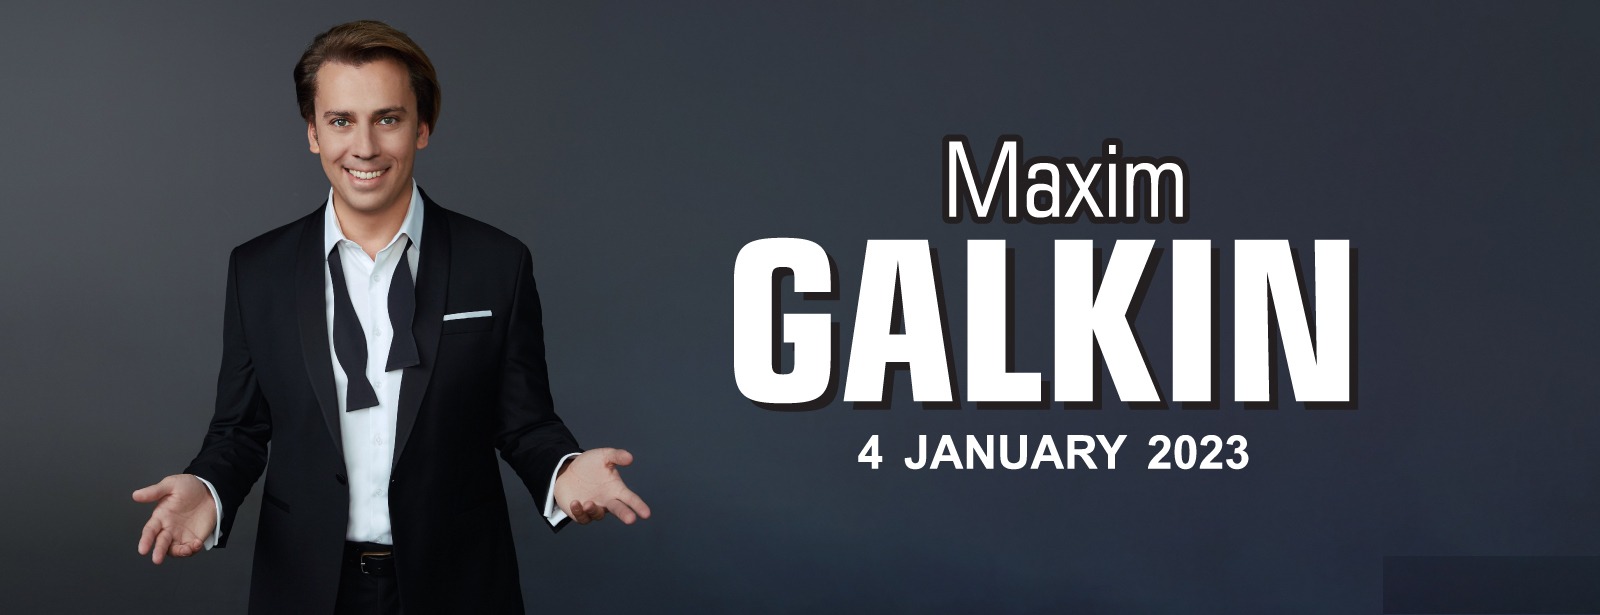 Maxim Galkin Live at Dubai Opera 2023 - Coming Soon in UAE